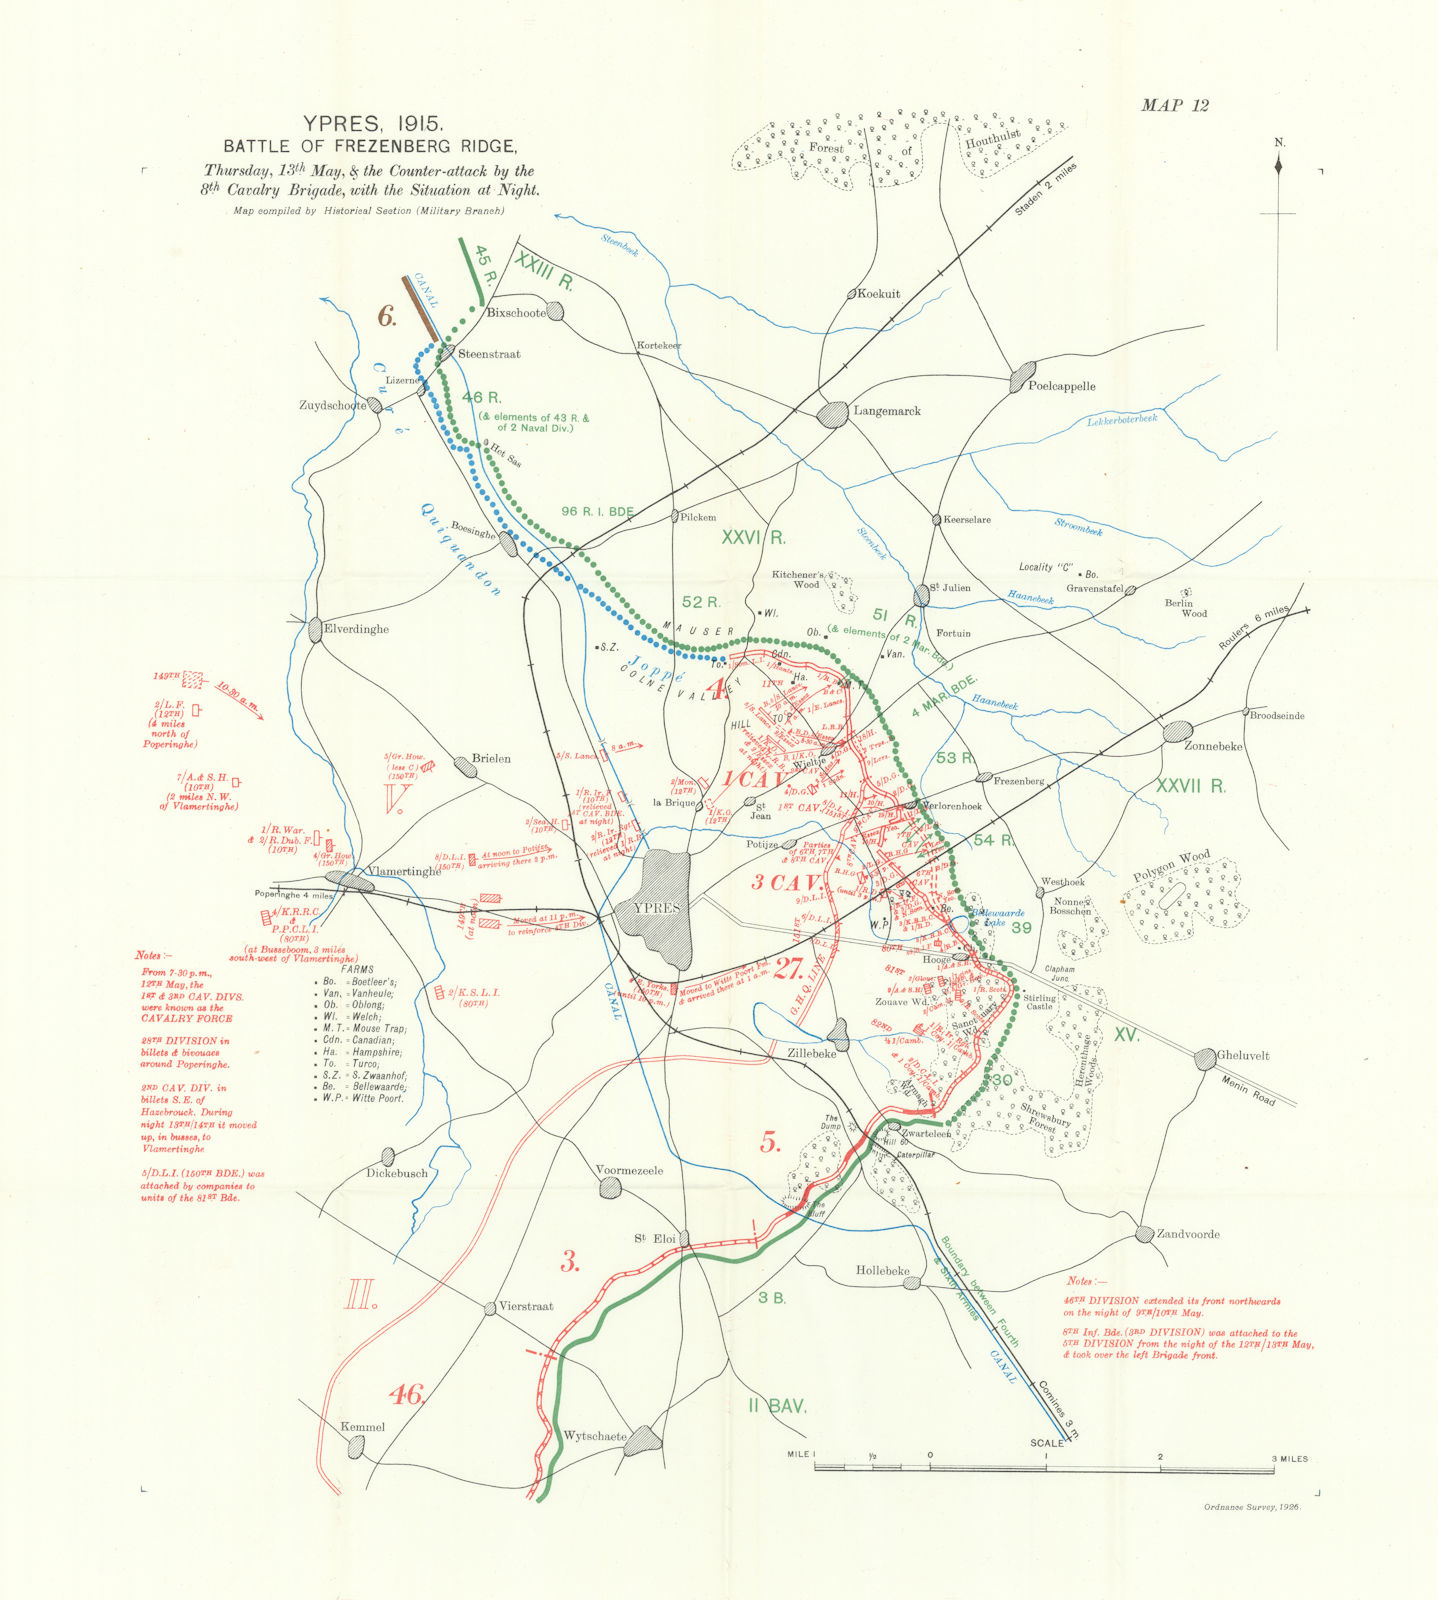 Battle of Frezenberg Ridge, 13th May 1915 night. Ypres First World War. 1928 map